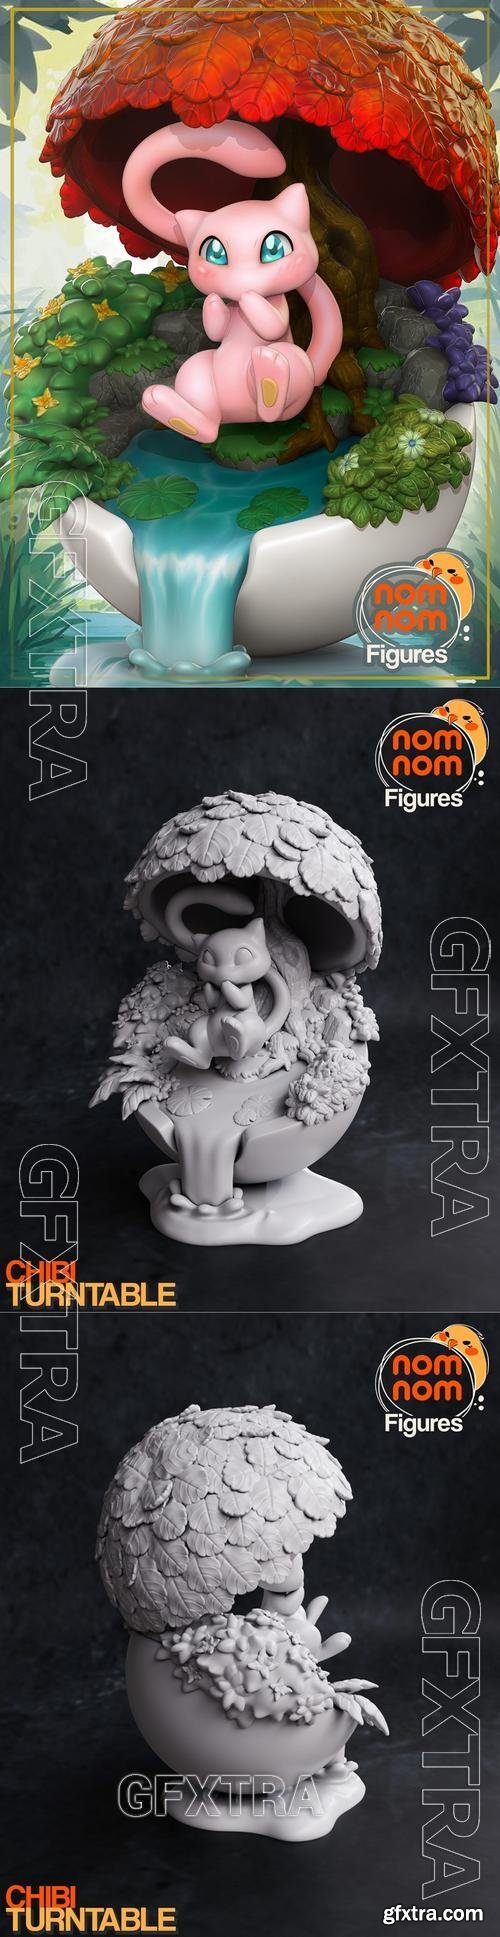 NomNom Figures - Chibi Mew from Pokemon &ndash; 3D Print Model